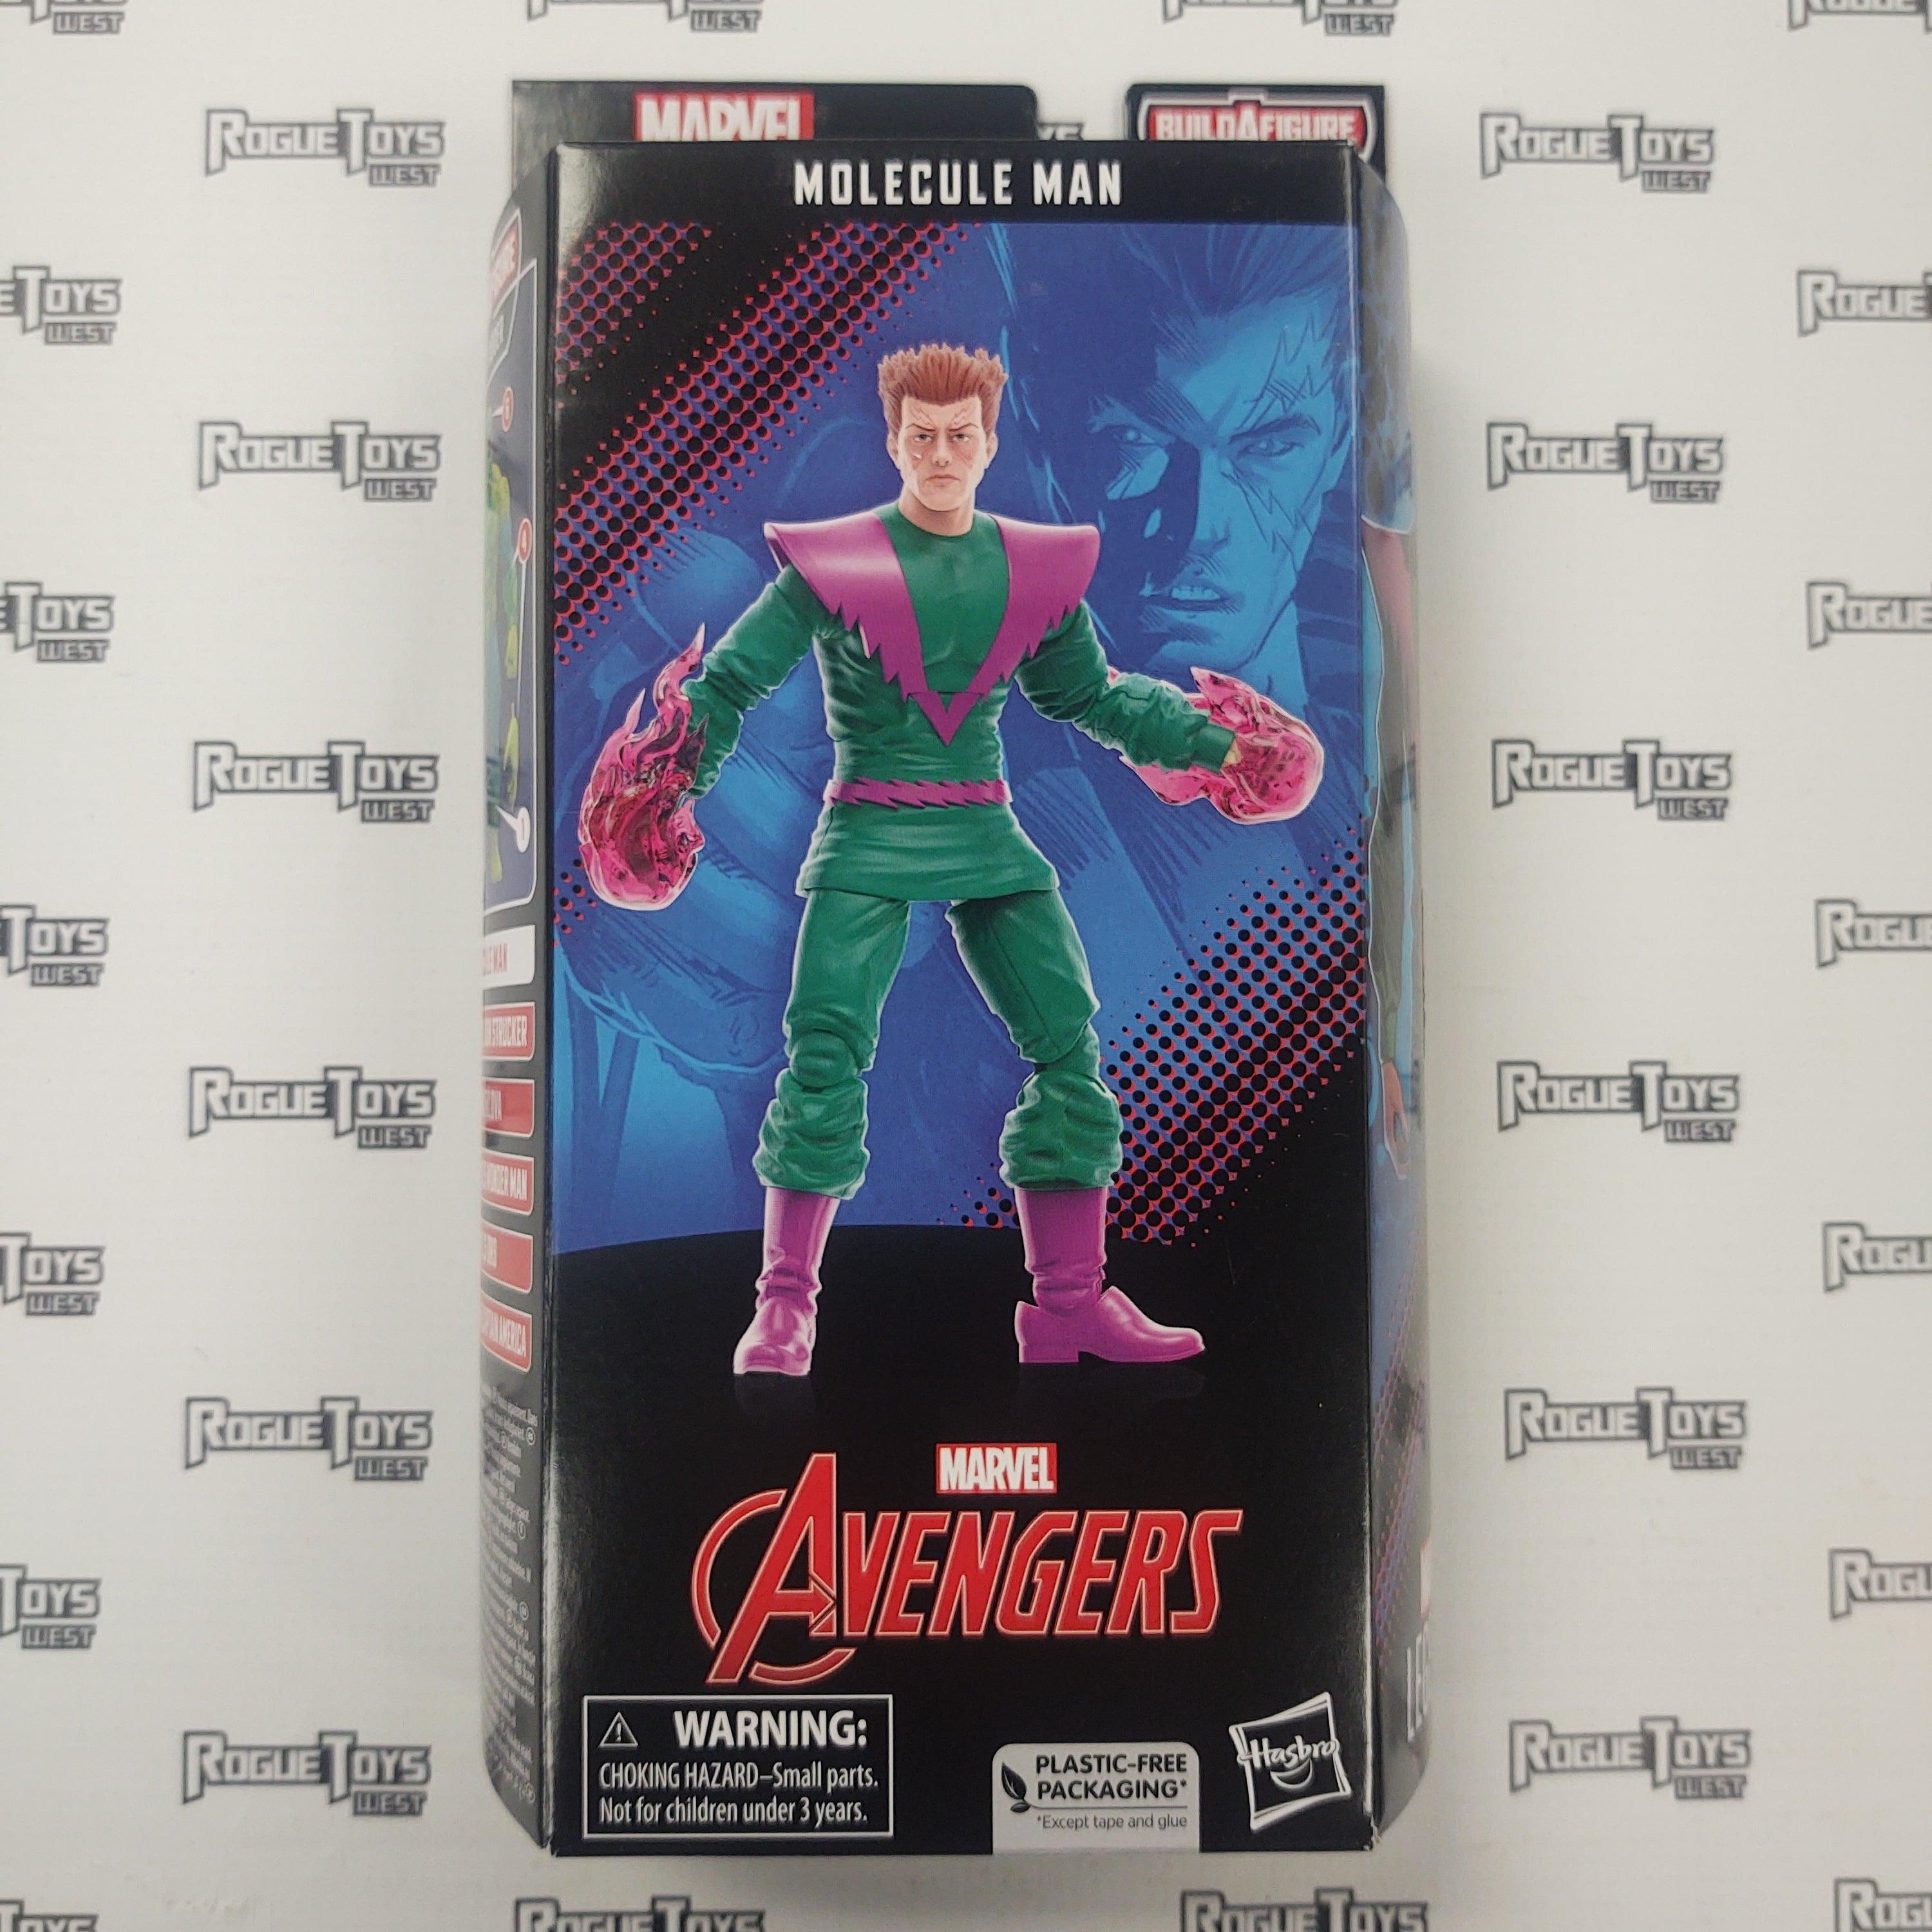 Hasbro Marvel Legends Avengers Molecule Man (Puff Adder Wave) - Rogue Toys